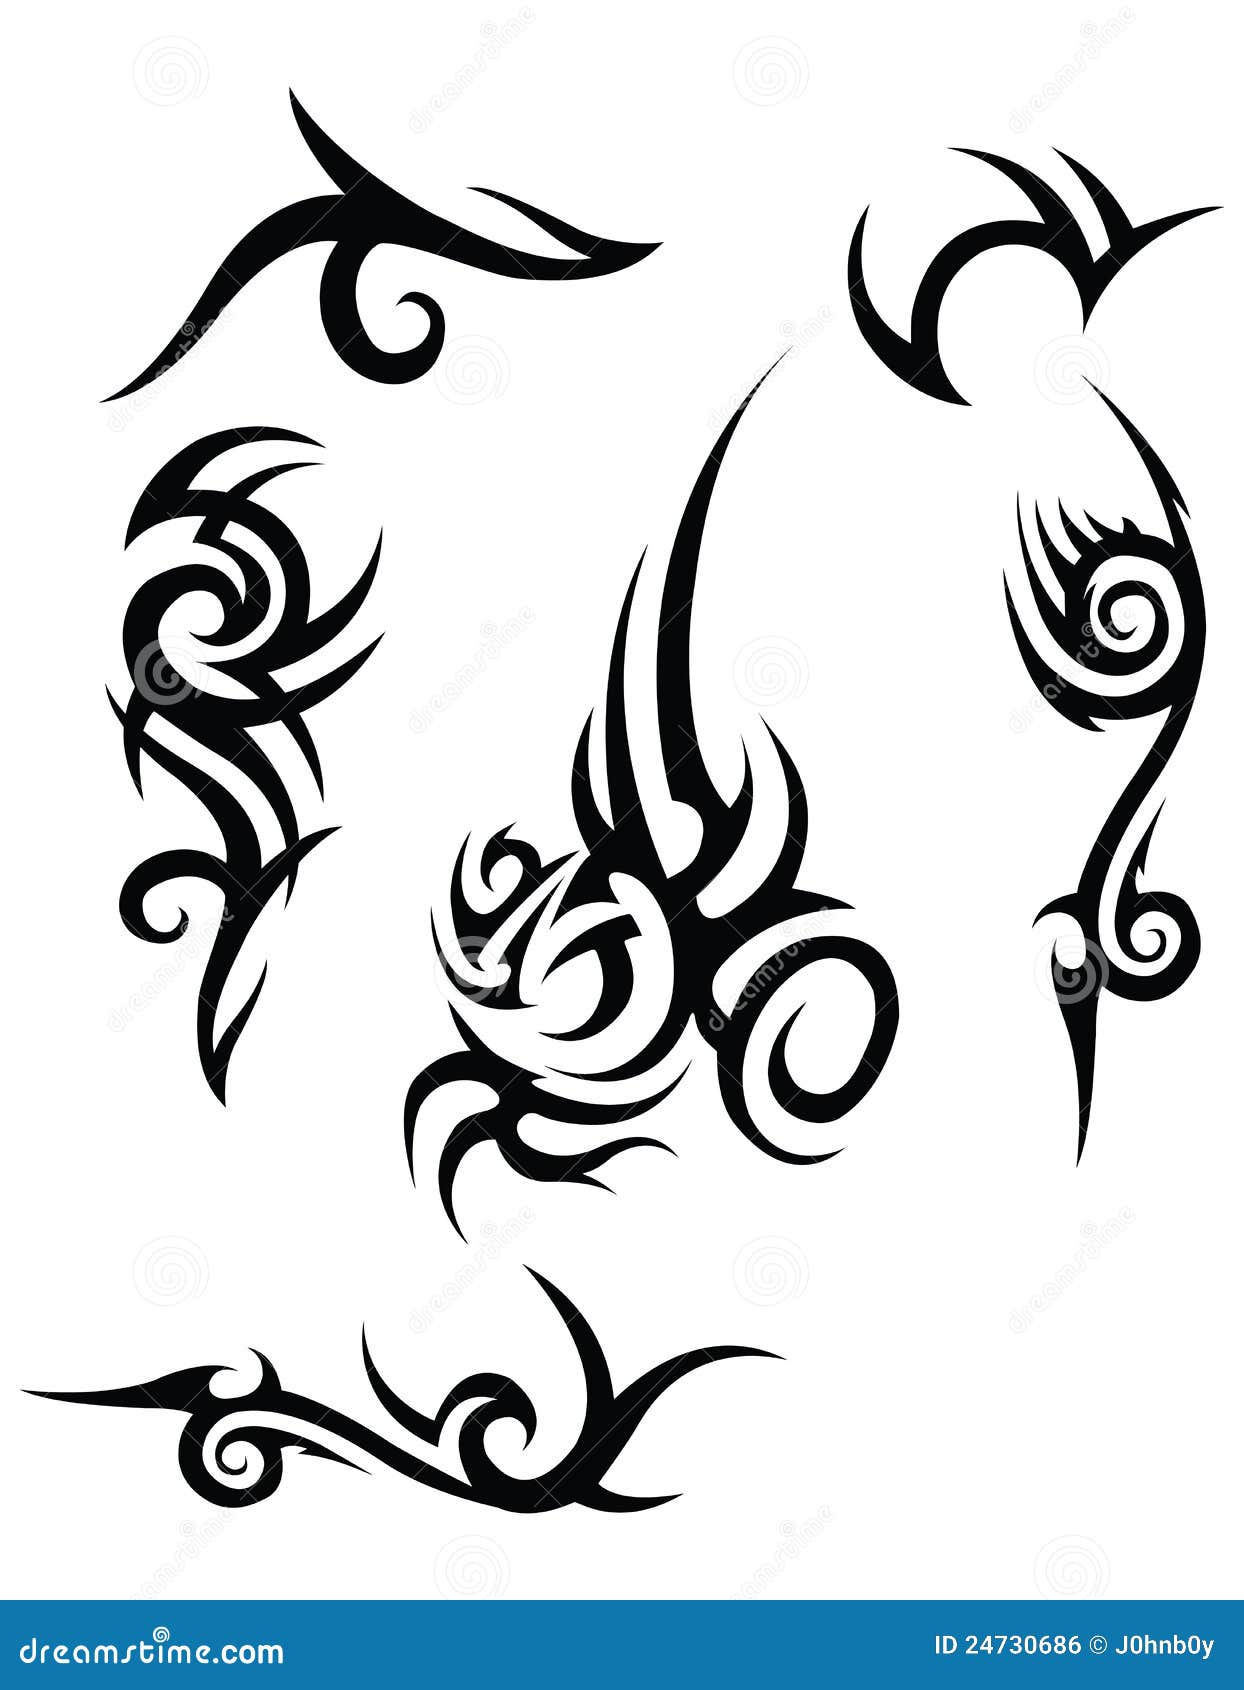 Premium Vector  Spider animal tribal tattoo black and white design